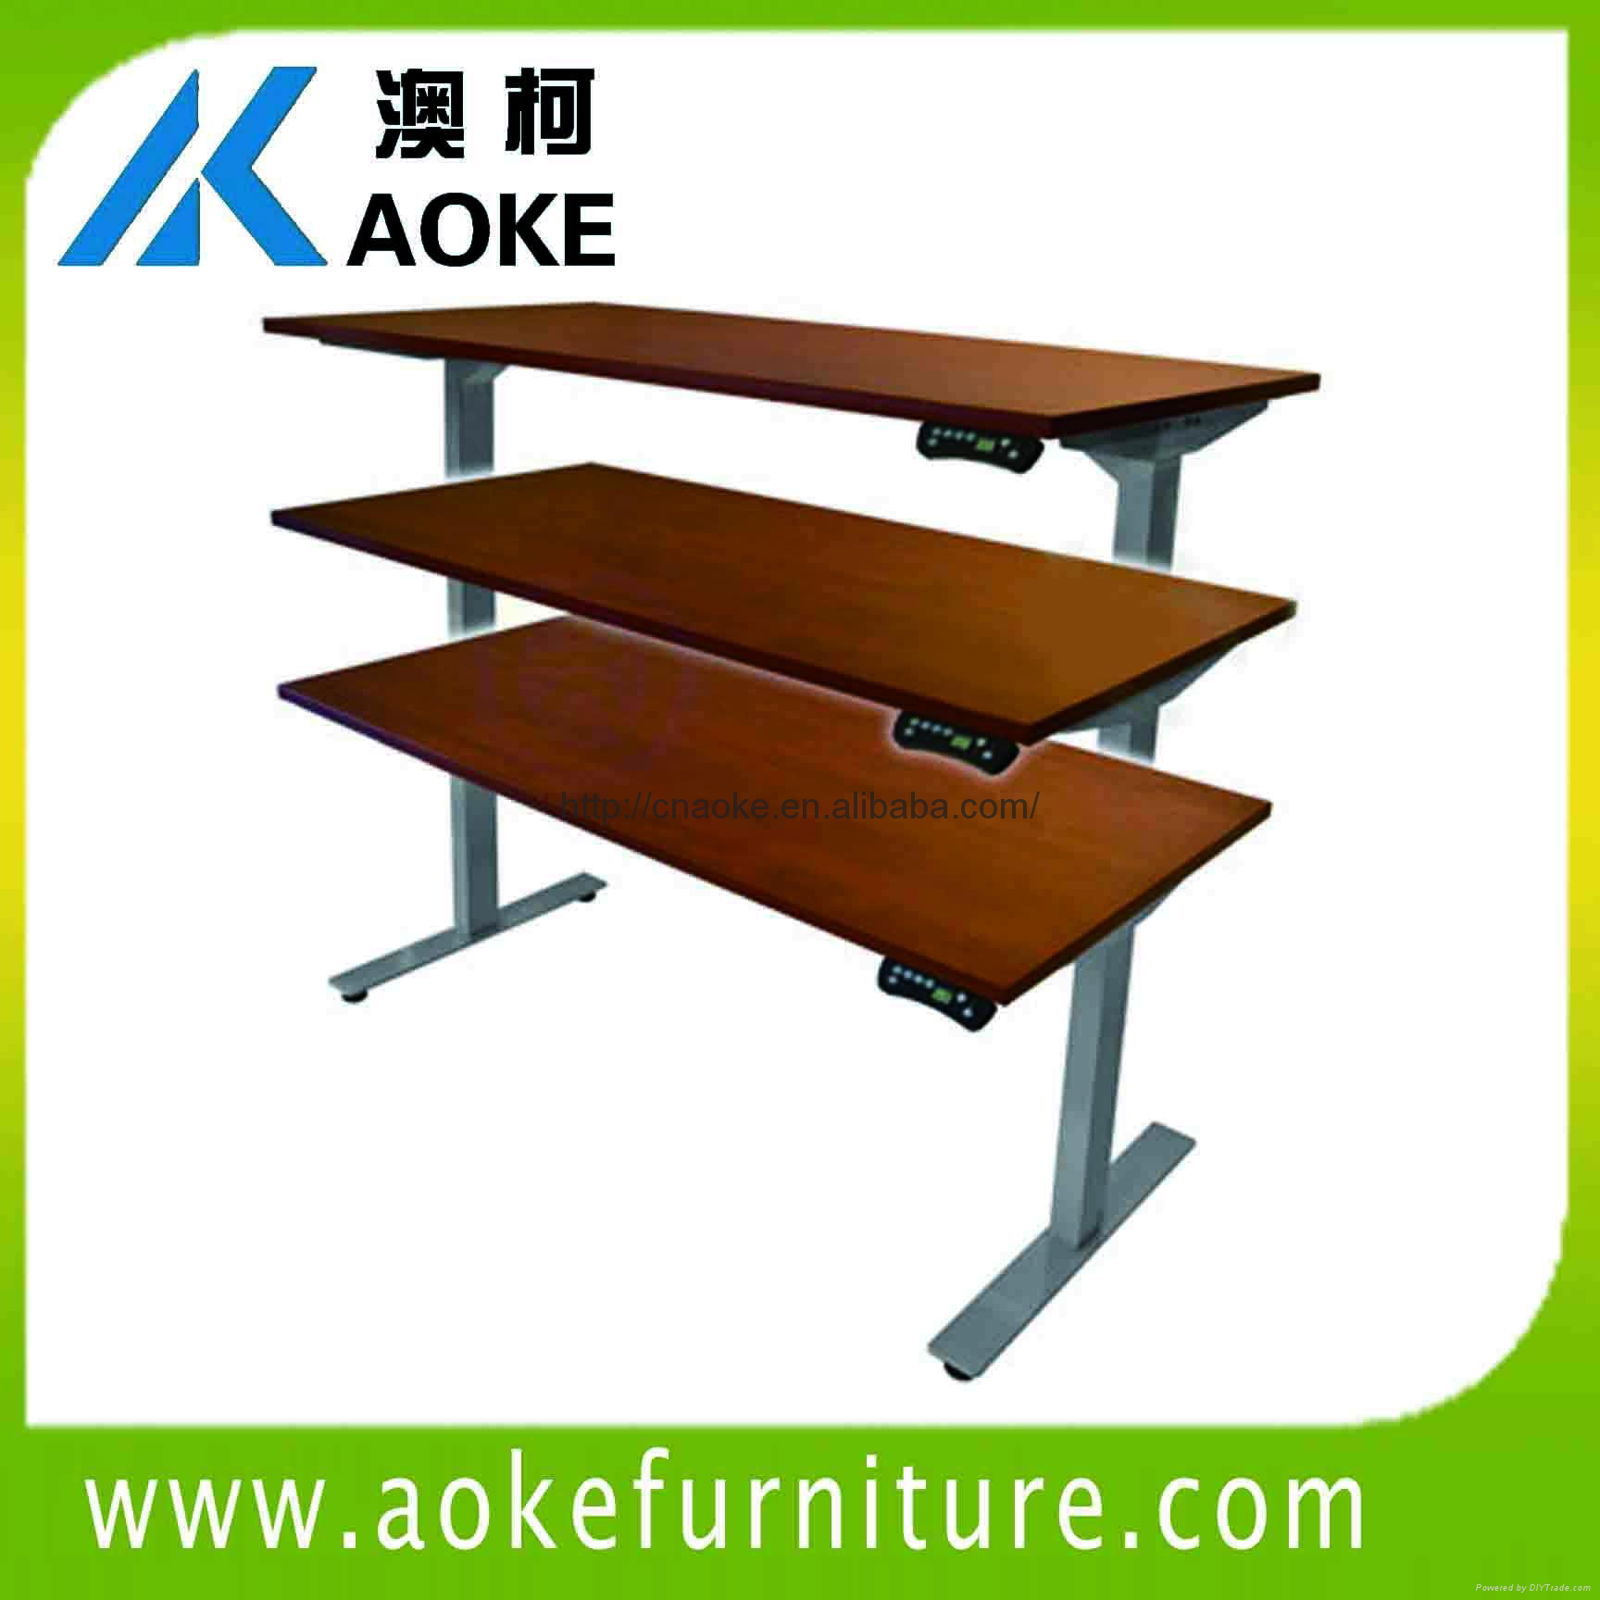 AOKE AK2RT-RS2 electric adjustable standing desk 2